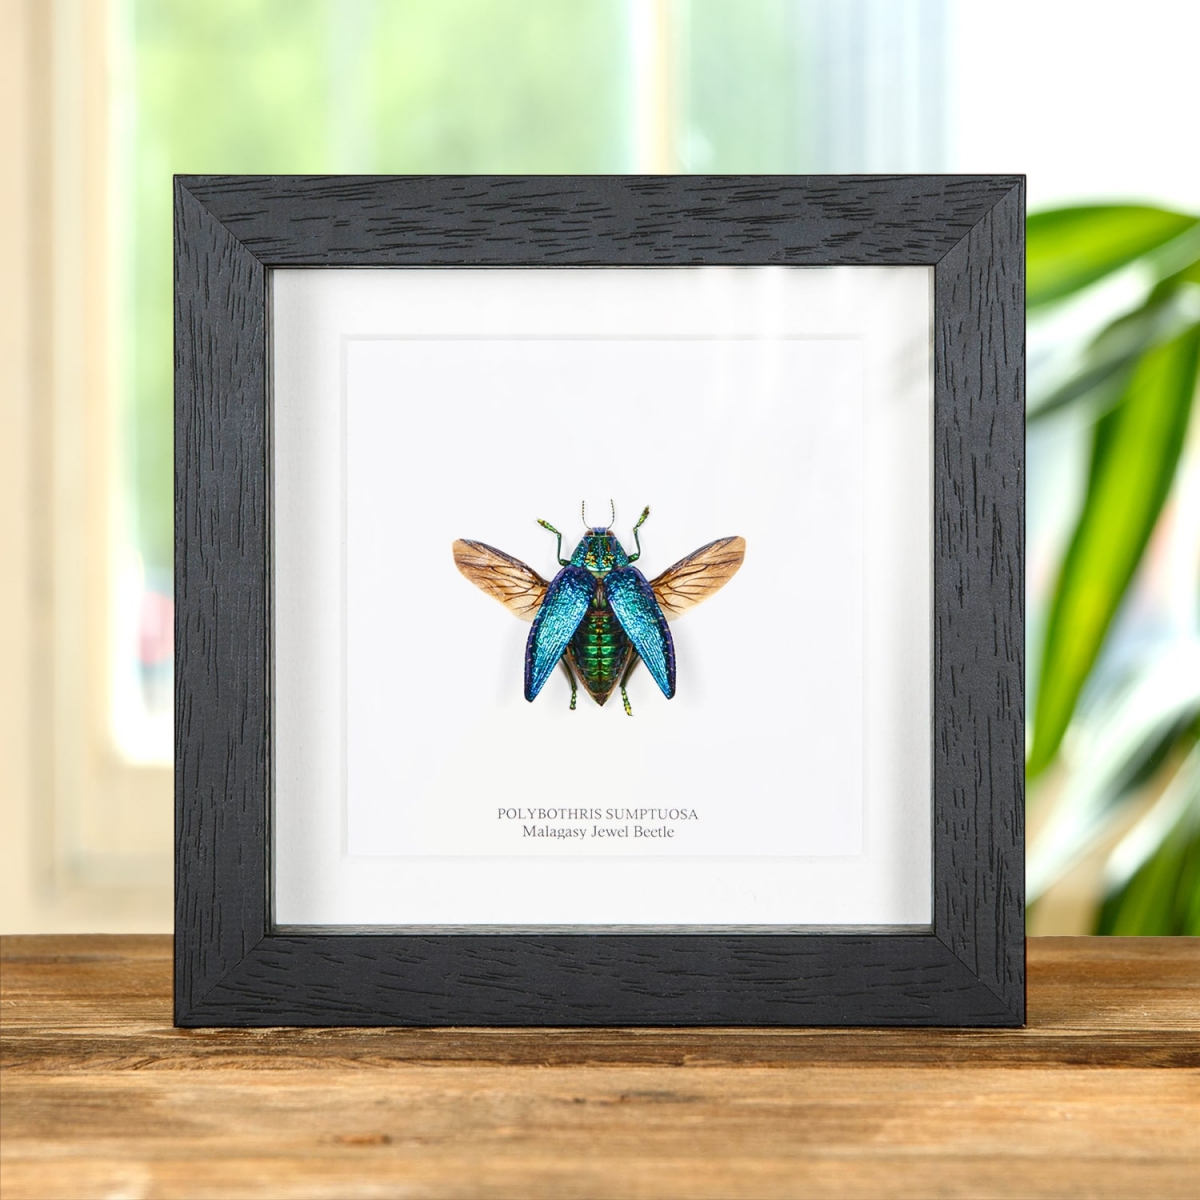 Minibeast Malagasy Jewel Beetle in Box Frame (Polybothris sumptuosa)